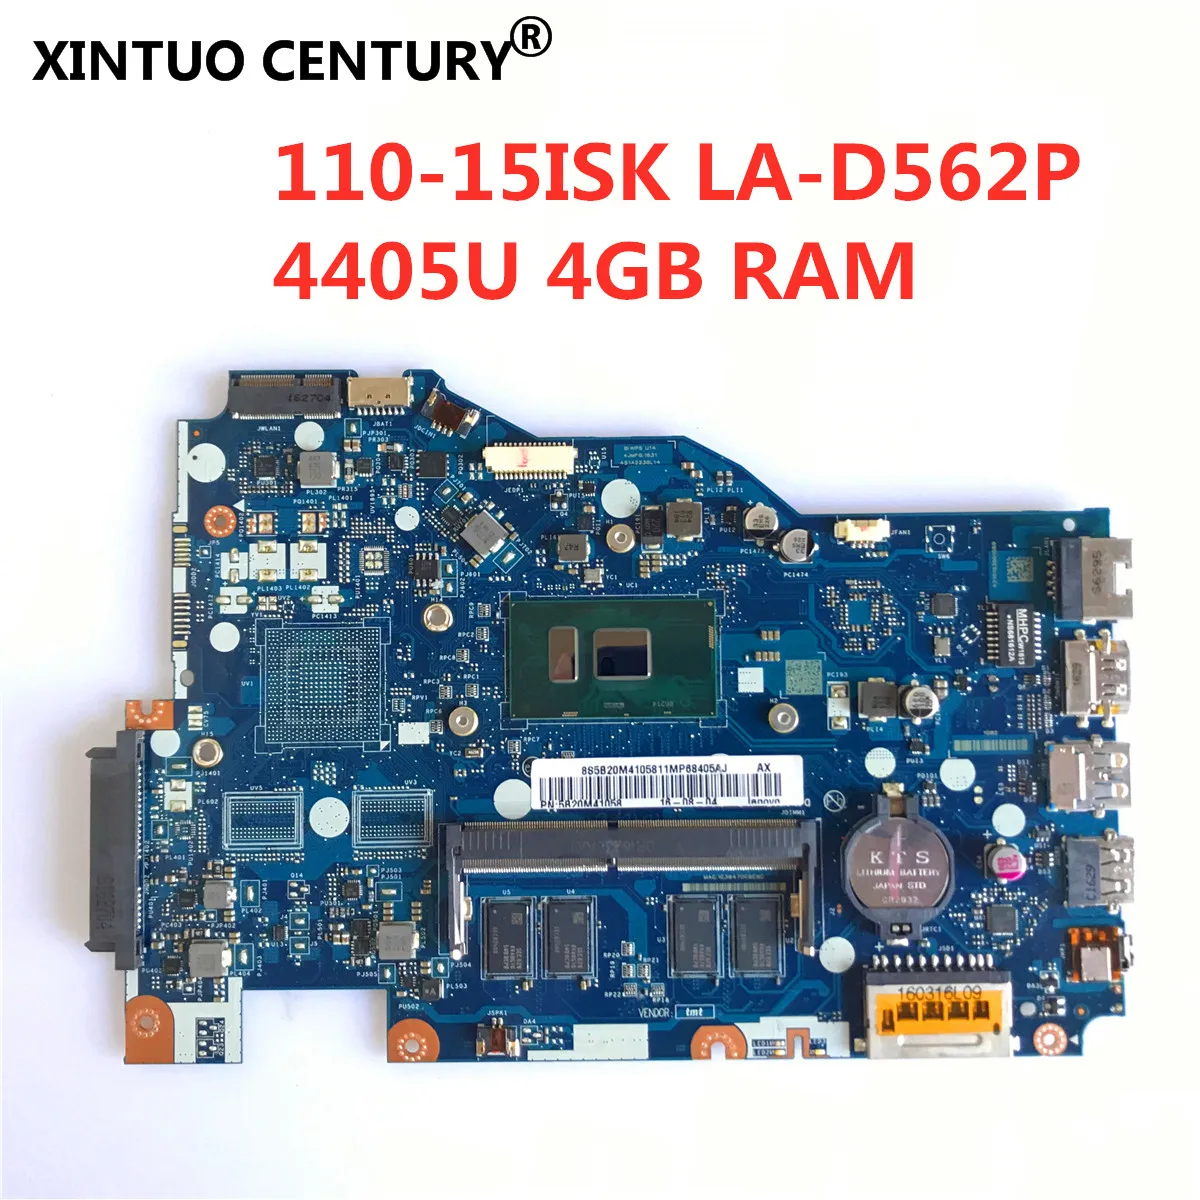 

LA-D562P Laotop motherboard para Lenovo Ideapad 110-15ISK mainboard original 4G-RAM 4405U Pentium CPU 100% tested ok